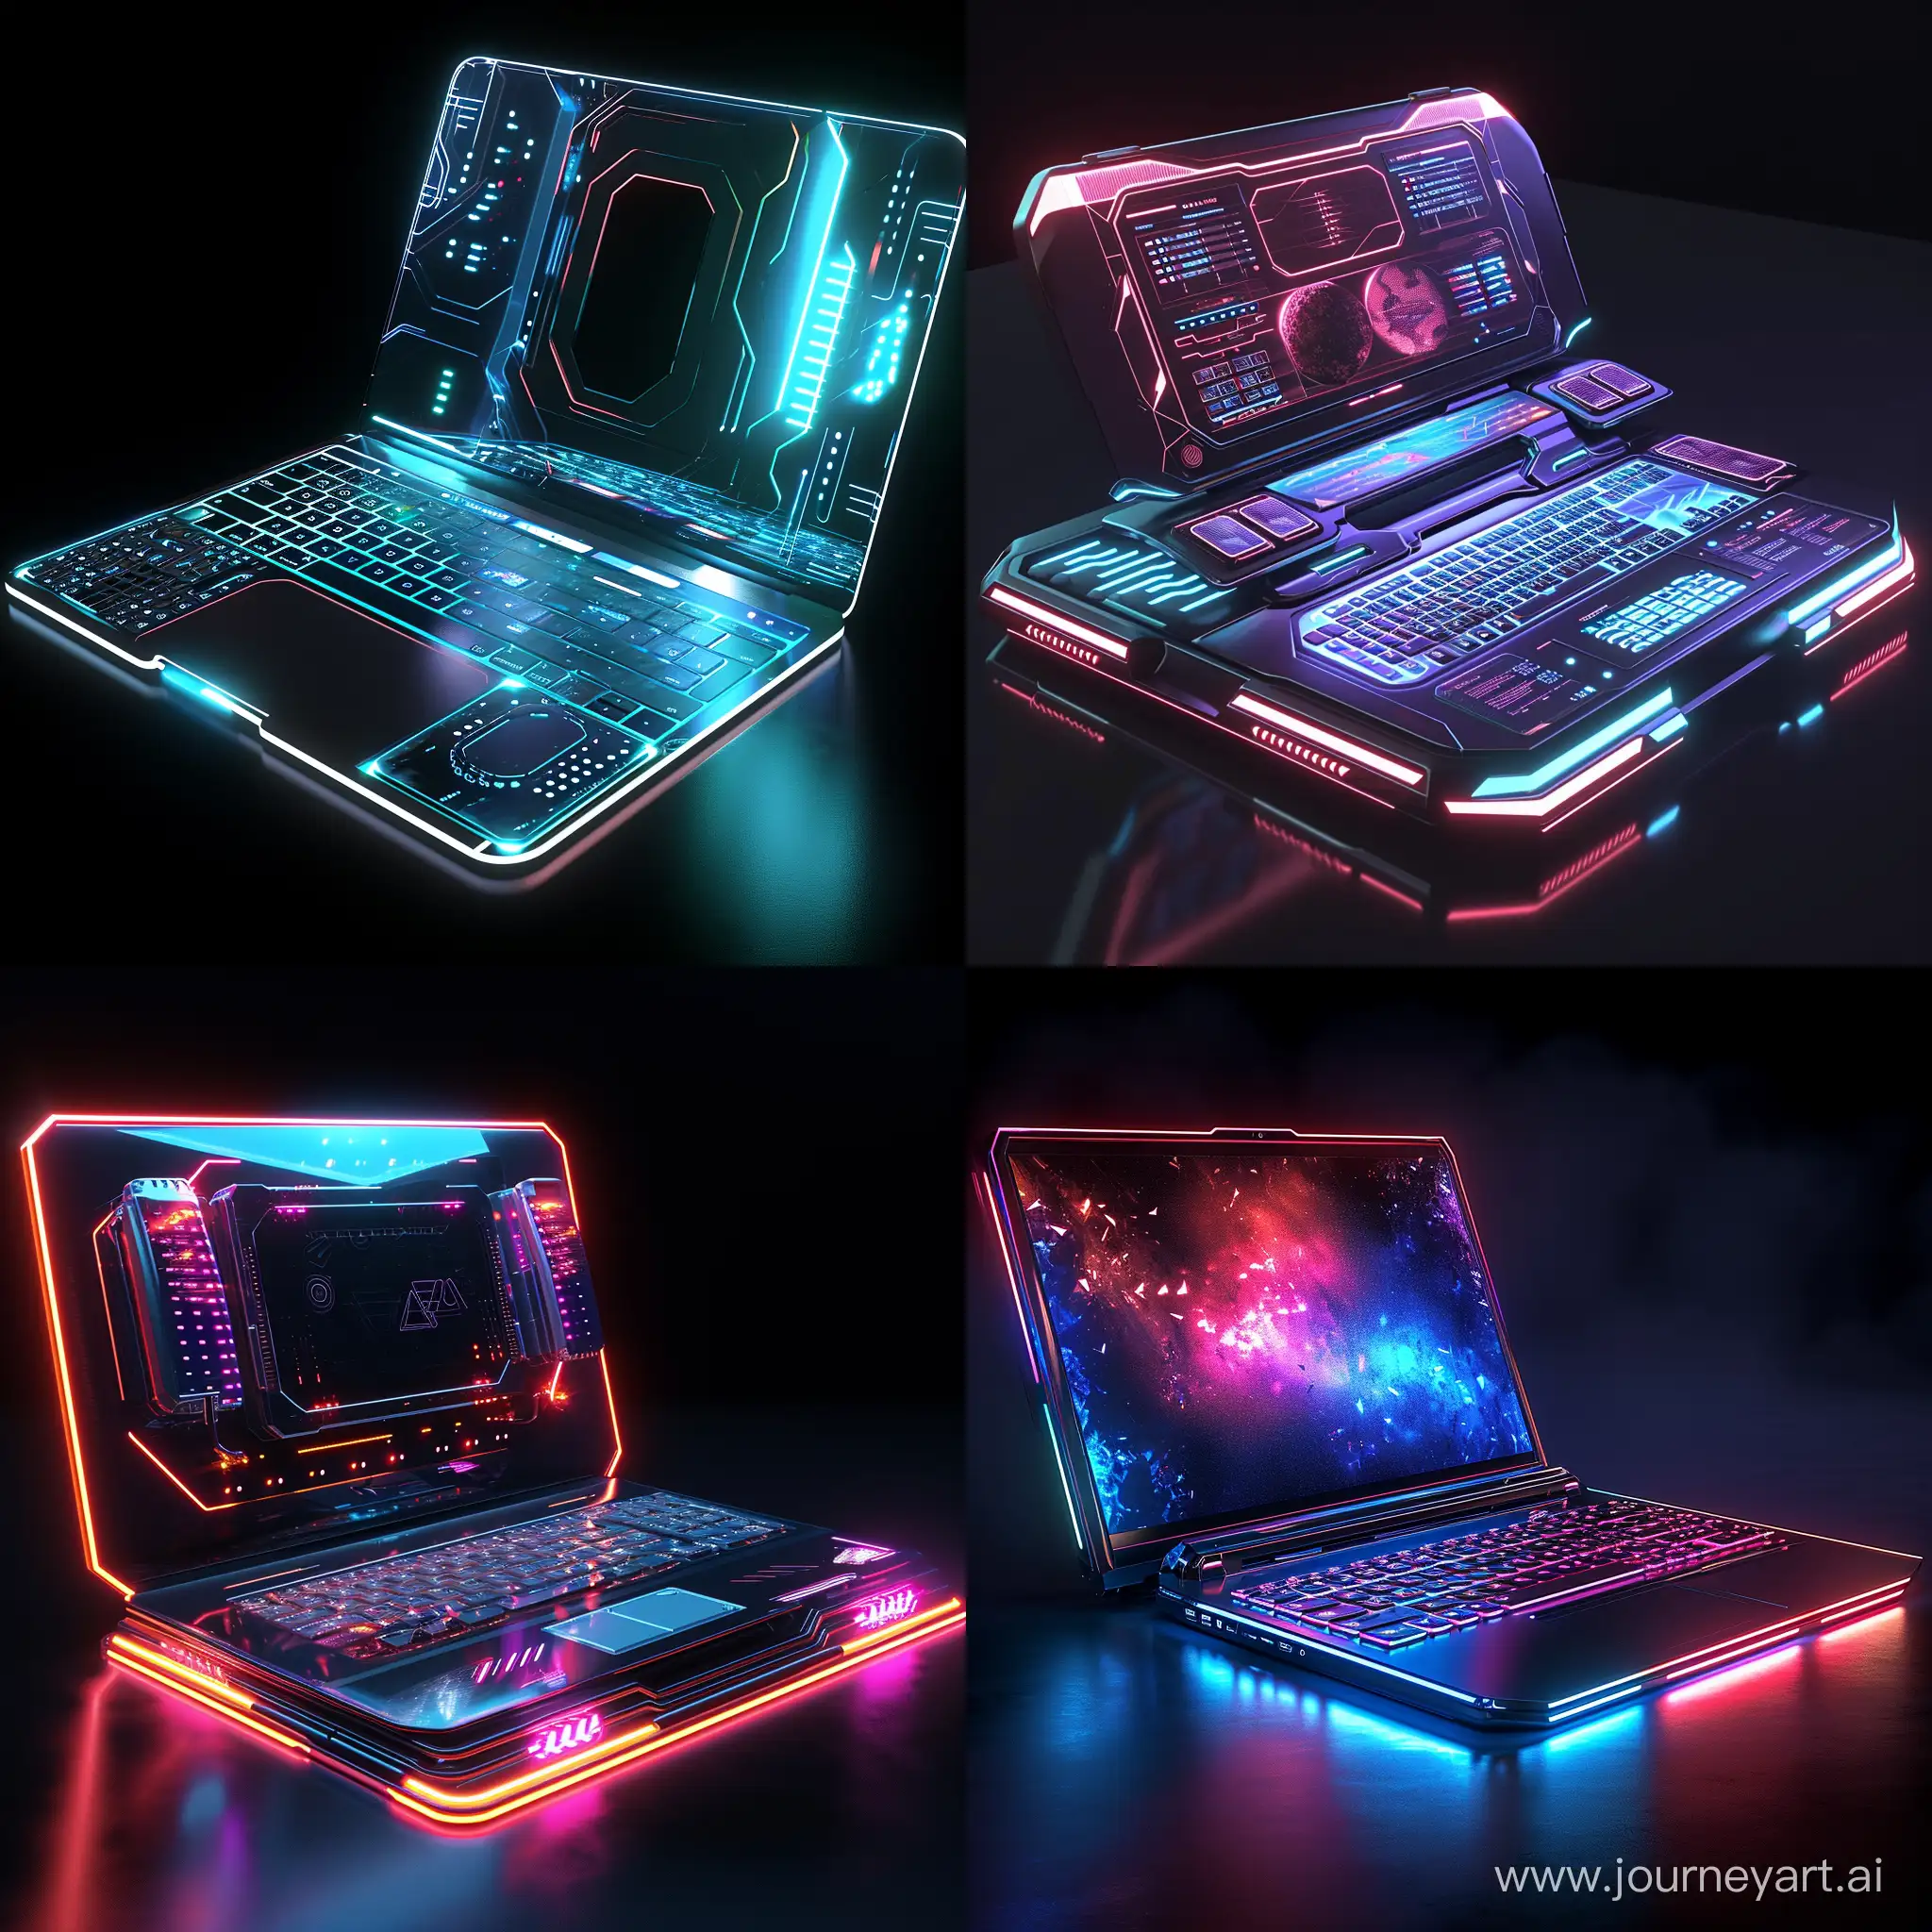 Futuristic-Ultramodern-Laptop-in-2020s-Style-HighTech-Science-Fiction-Art